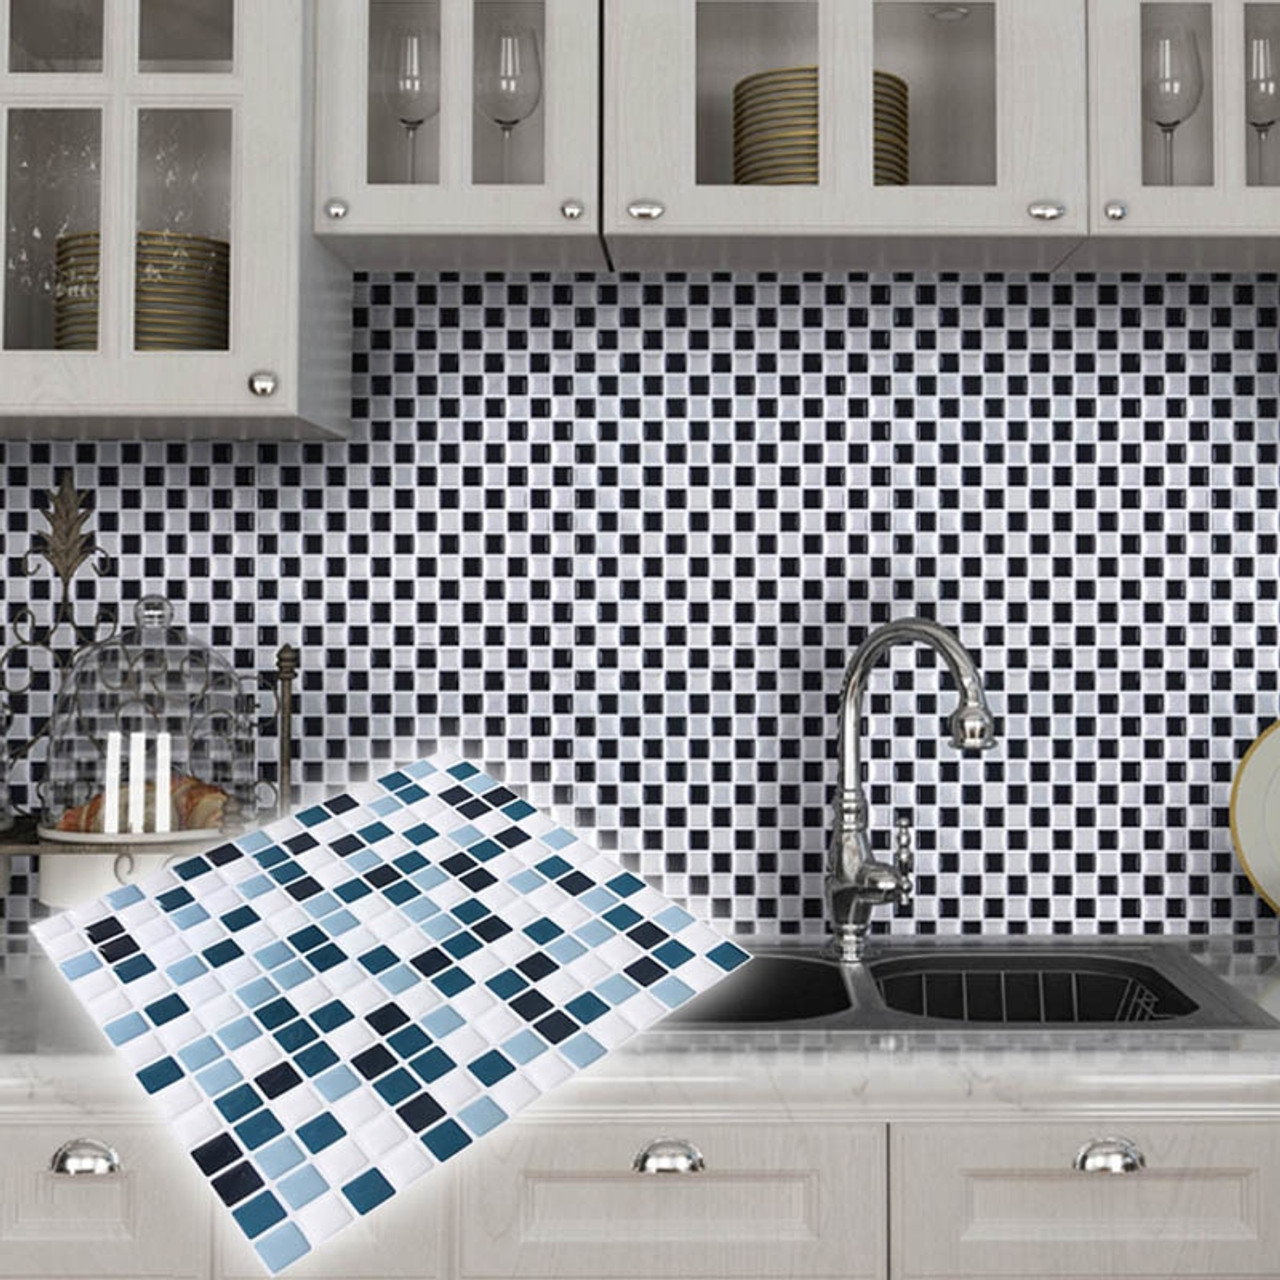 DIY Mosaic Tile Kitchen Wallpaper 3D Wall Stickers Home Decor Waterproof PVC Bathroom Decorative Self Adhesive Kitchen Stickers OnshopDealsCom